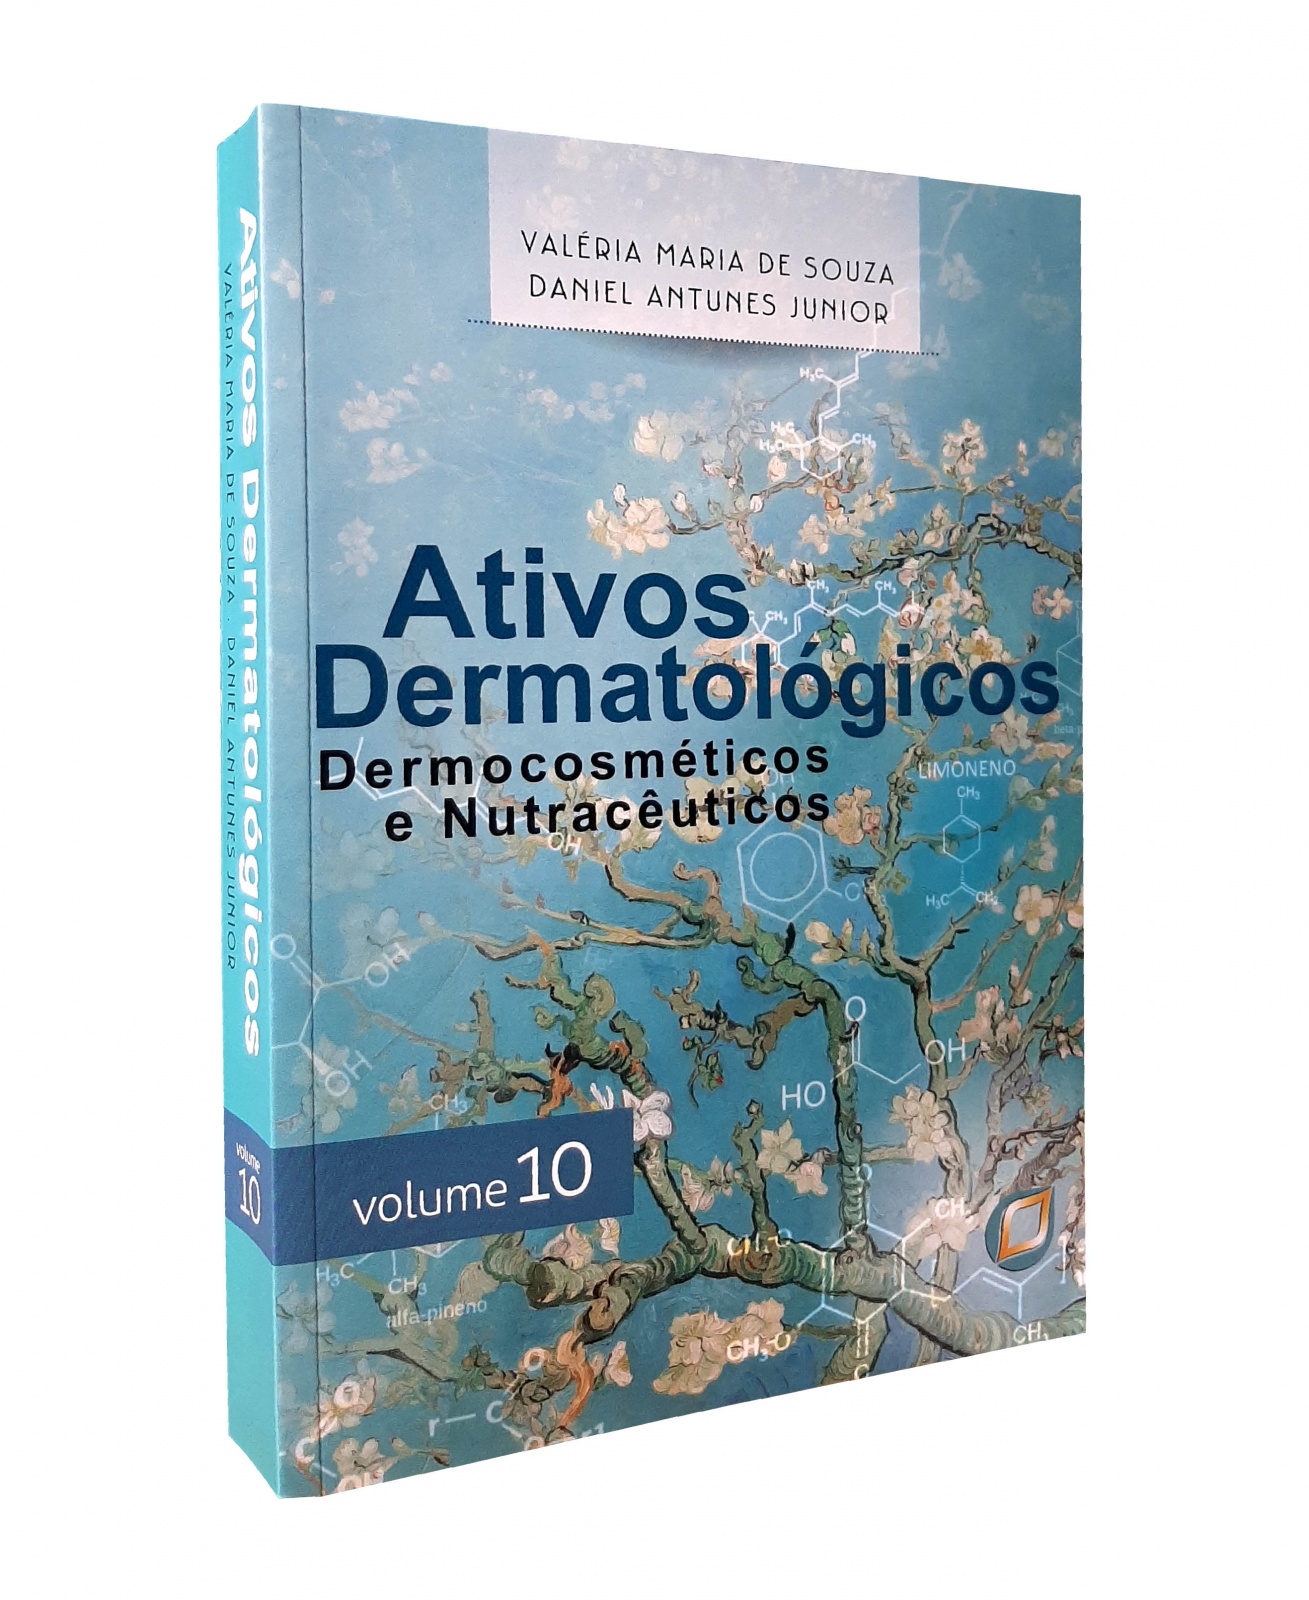 Ativos Dermatológicos: Dermocosméticos E Nutracêuticos - Volume 10